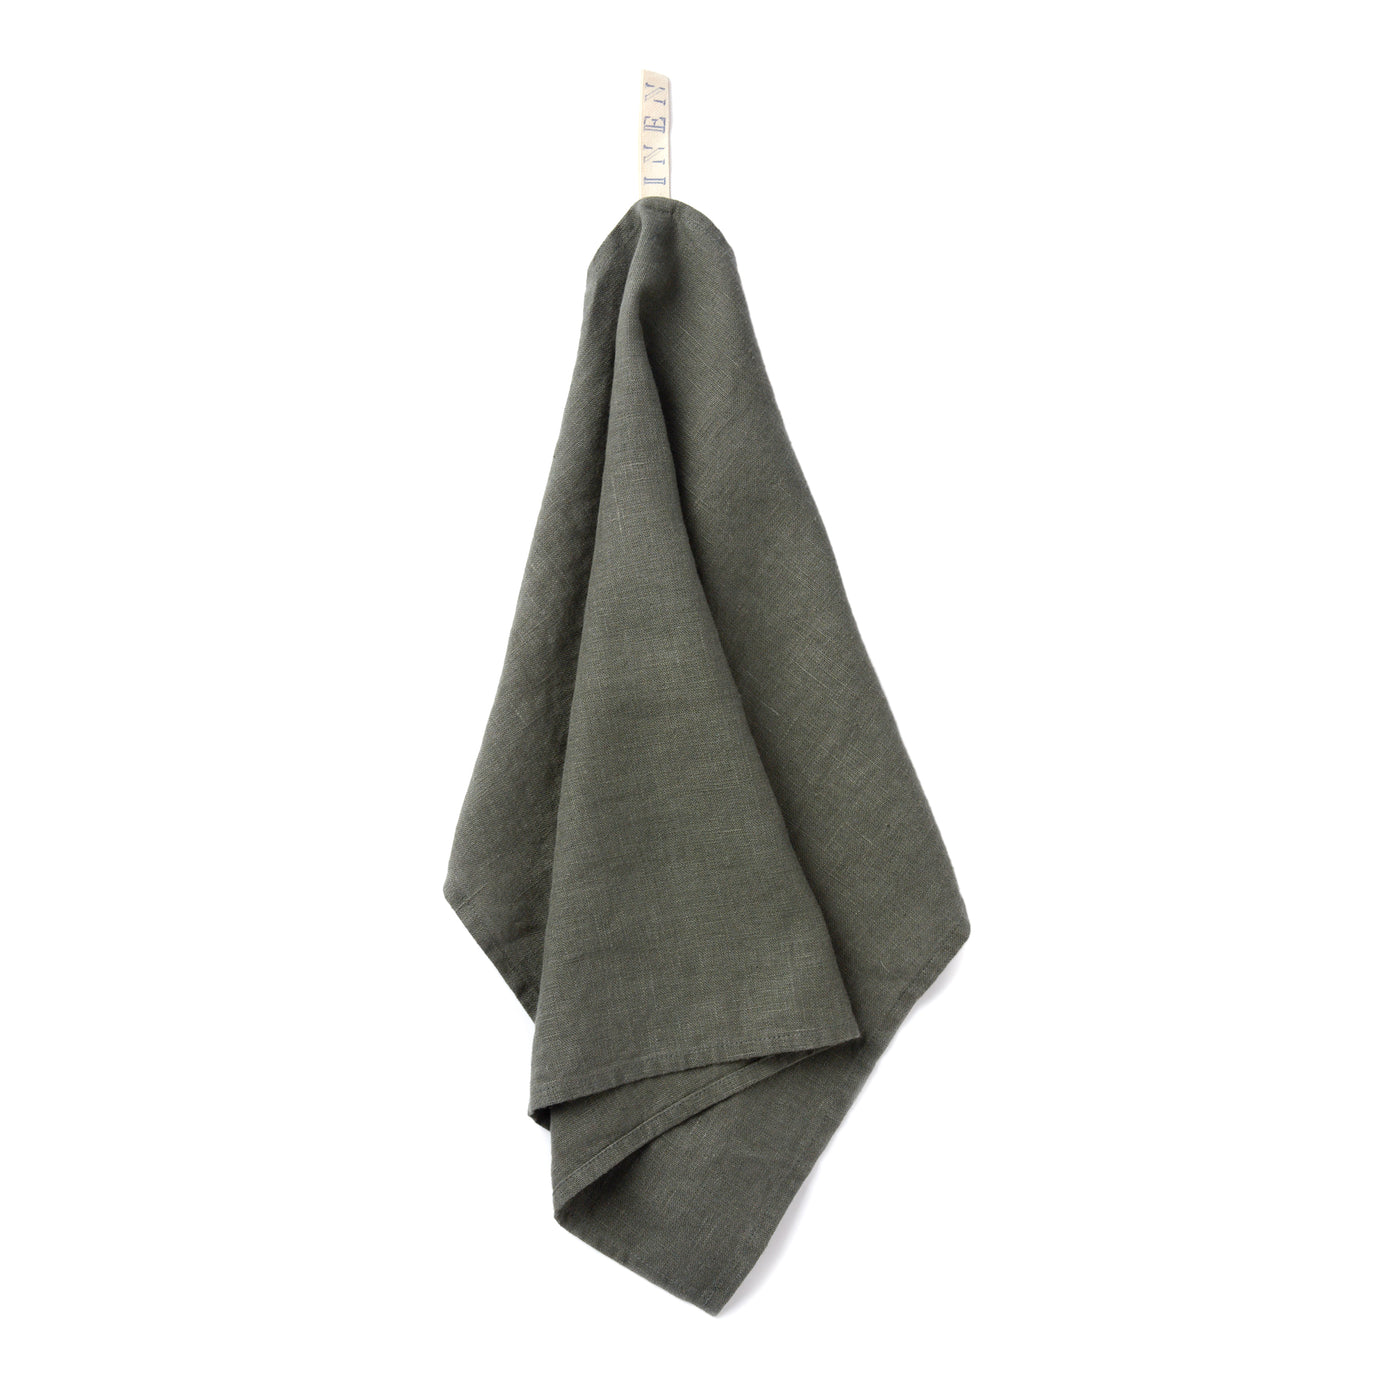 Linen Kitchen Towel - Grey/Green